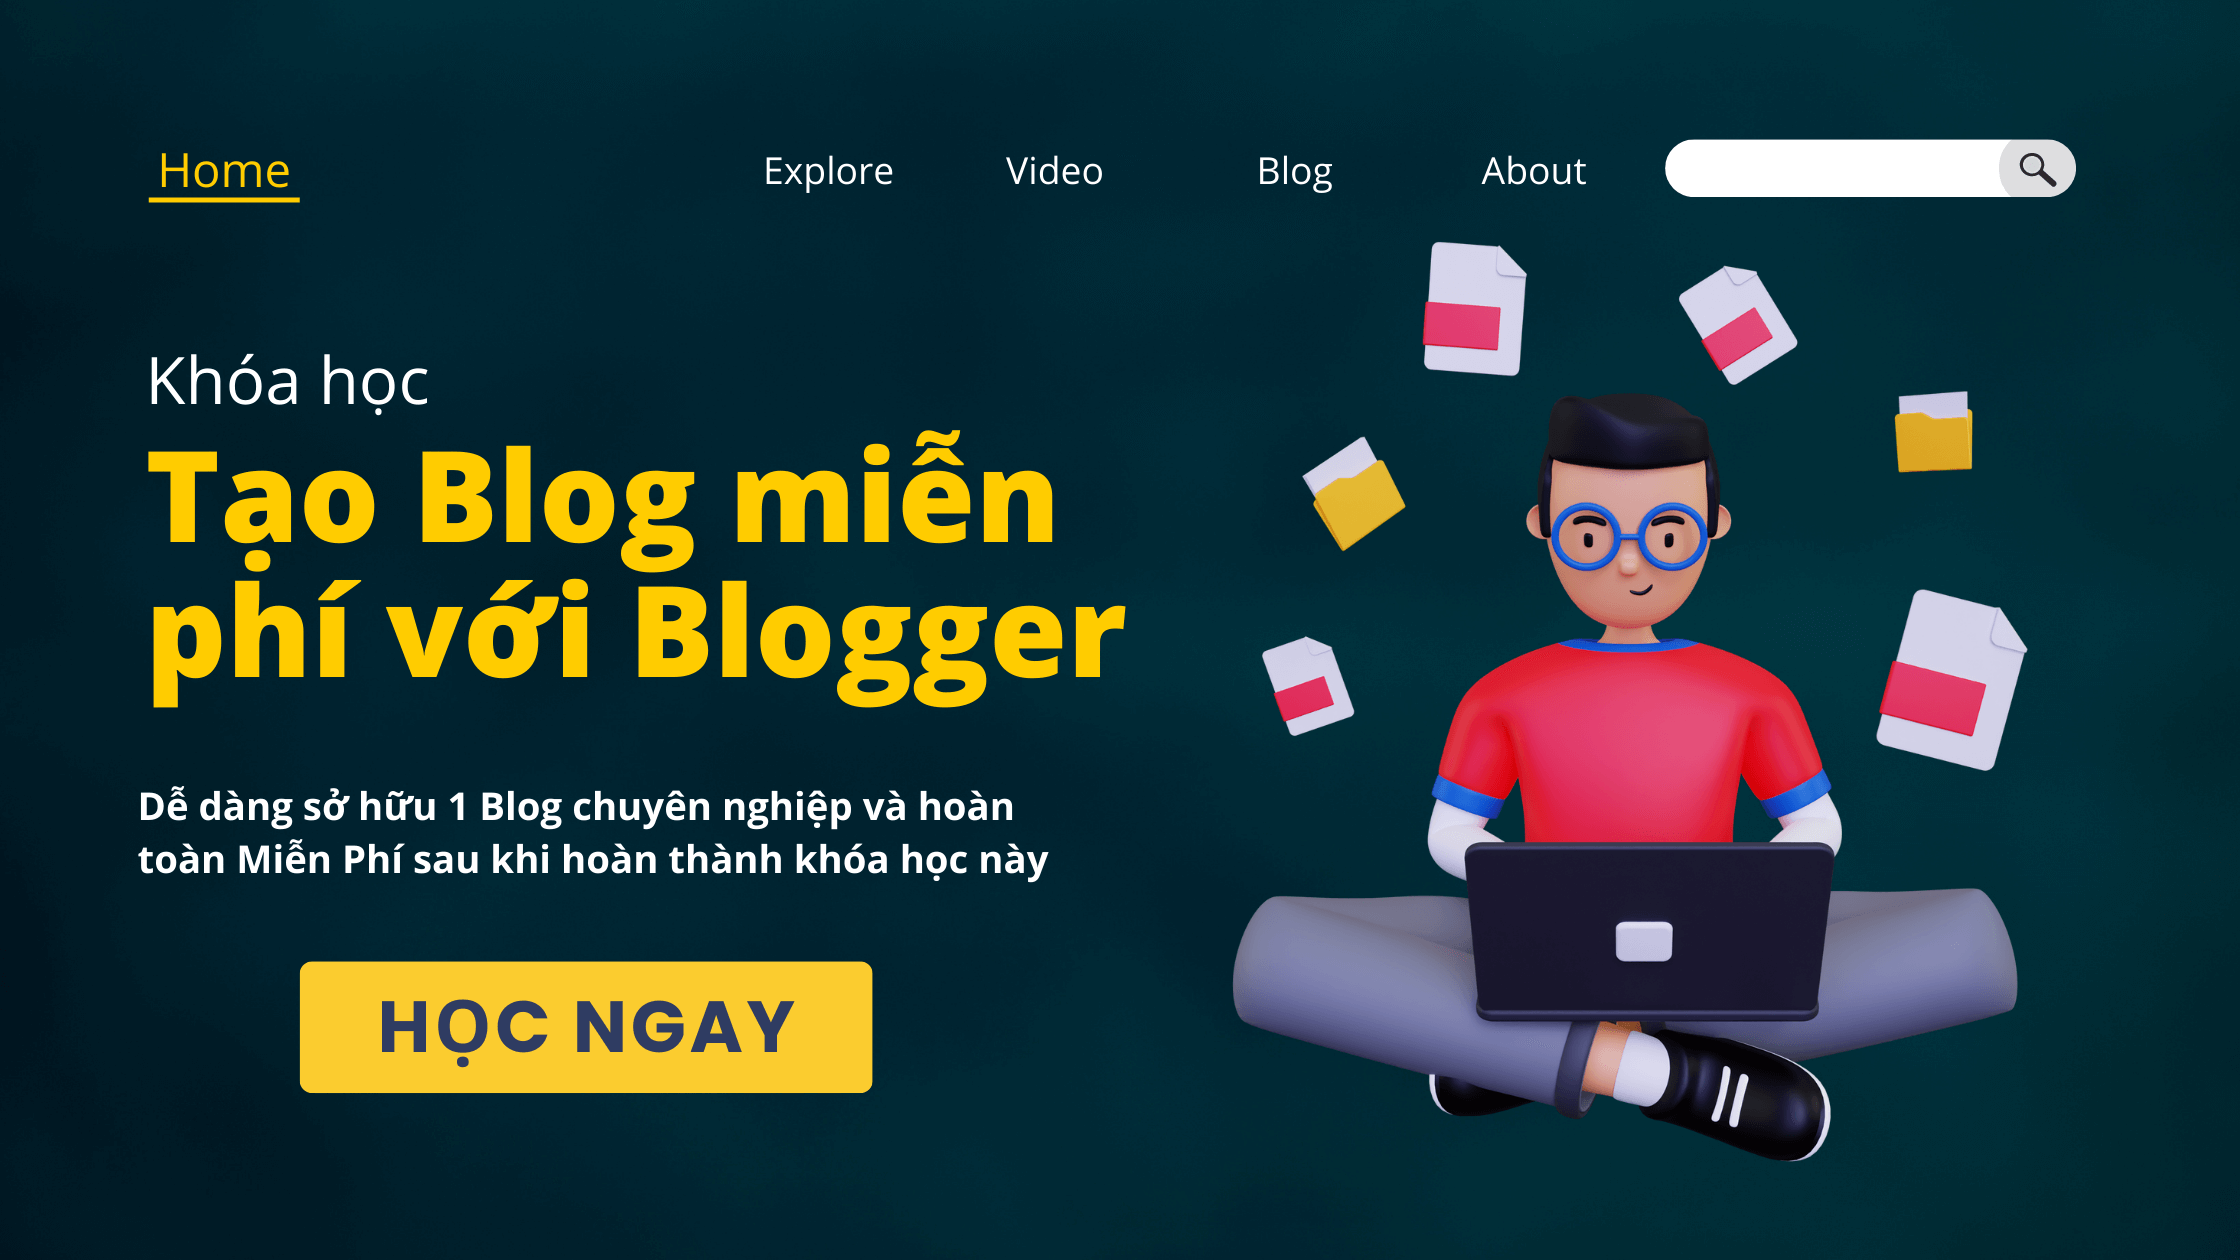 Khoa-hoc-tao-blog-mien-phi-voi-blogger